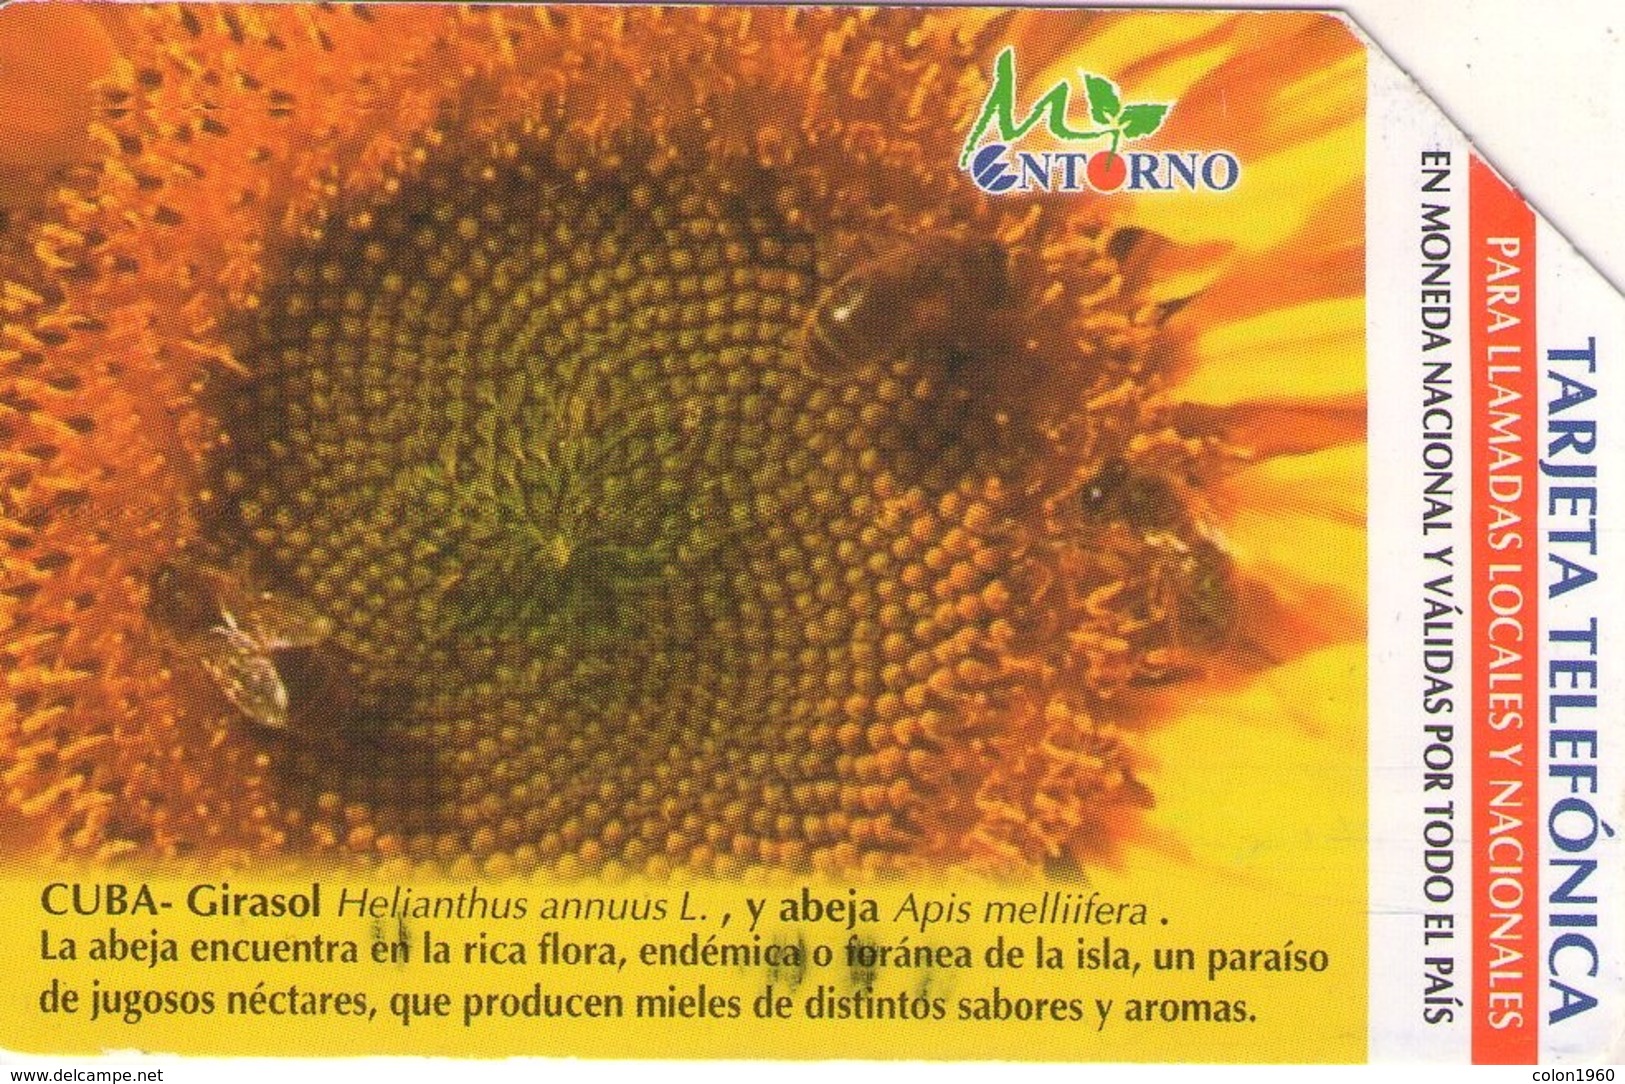 CUBA. Sunflower 2. GIRASOL. 2003-01. 75000 Ex. CU-UR-031. (279) - Cuba